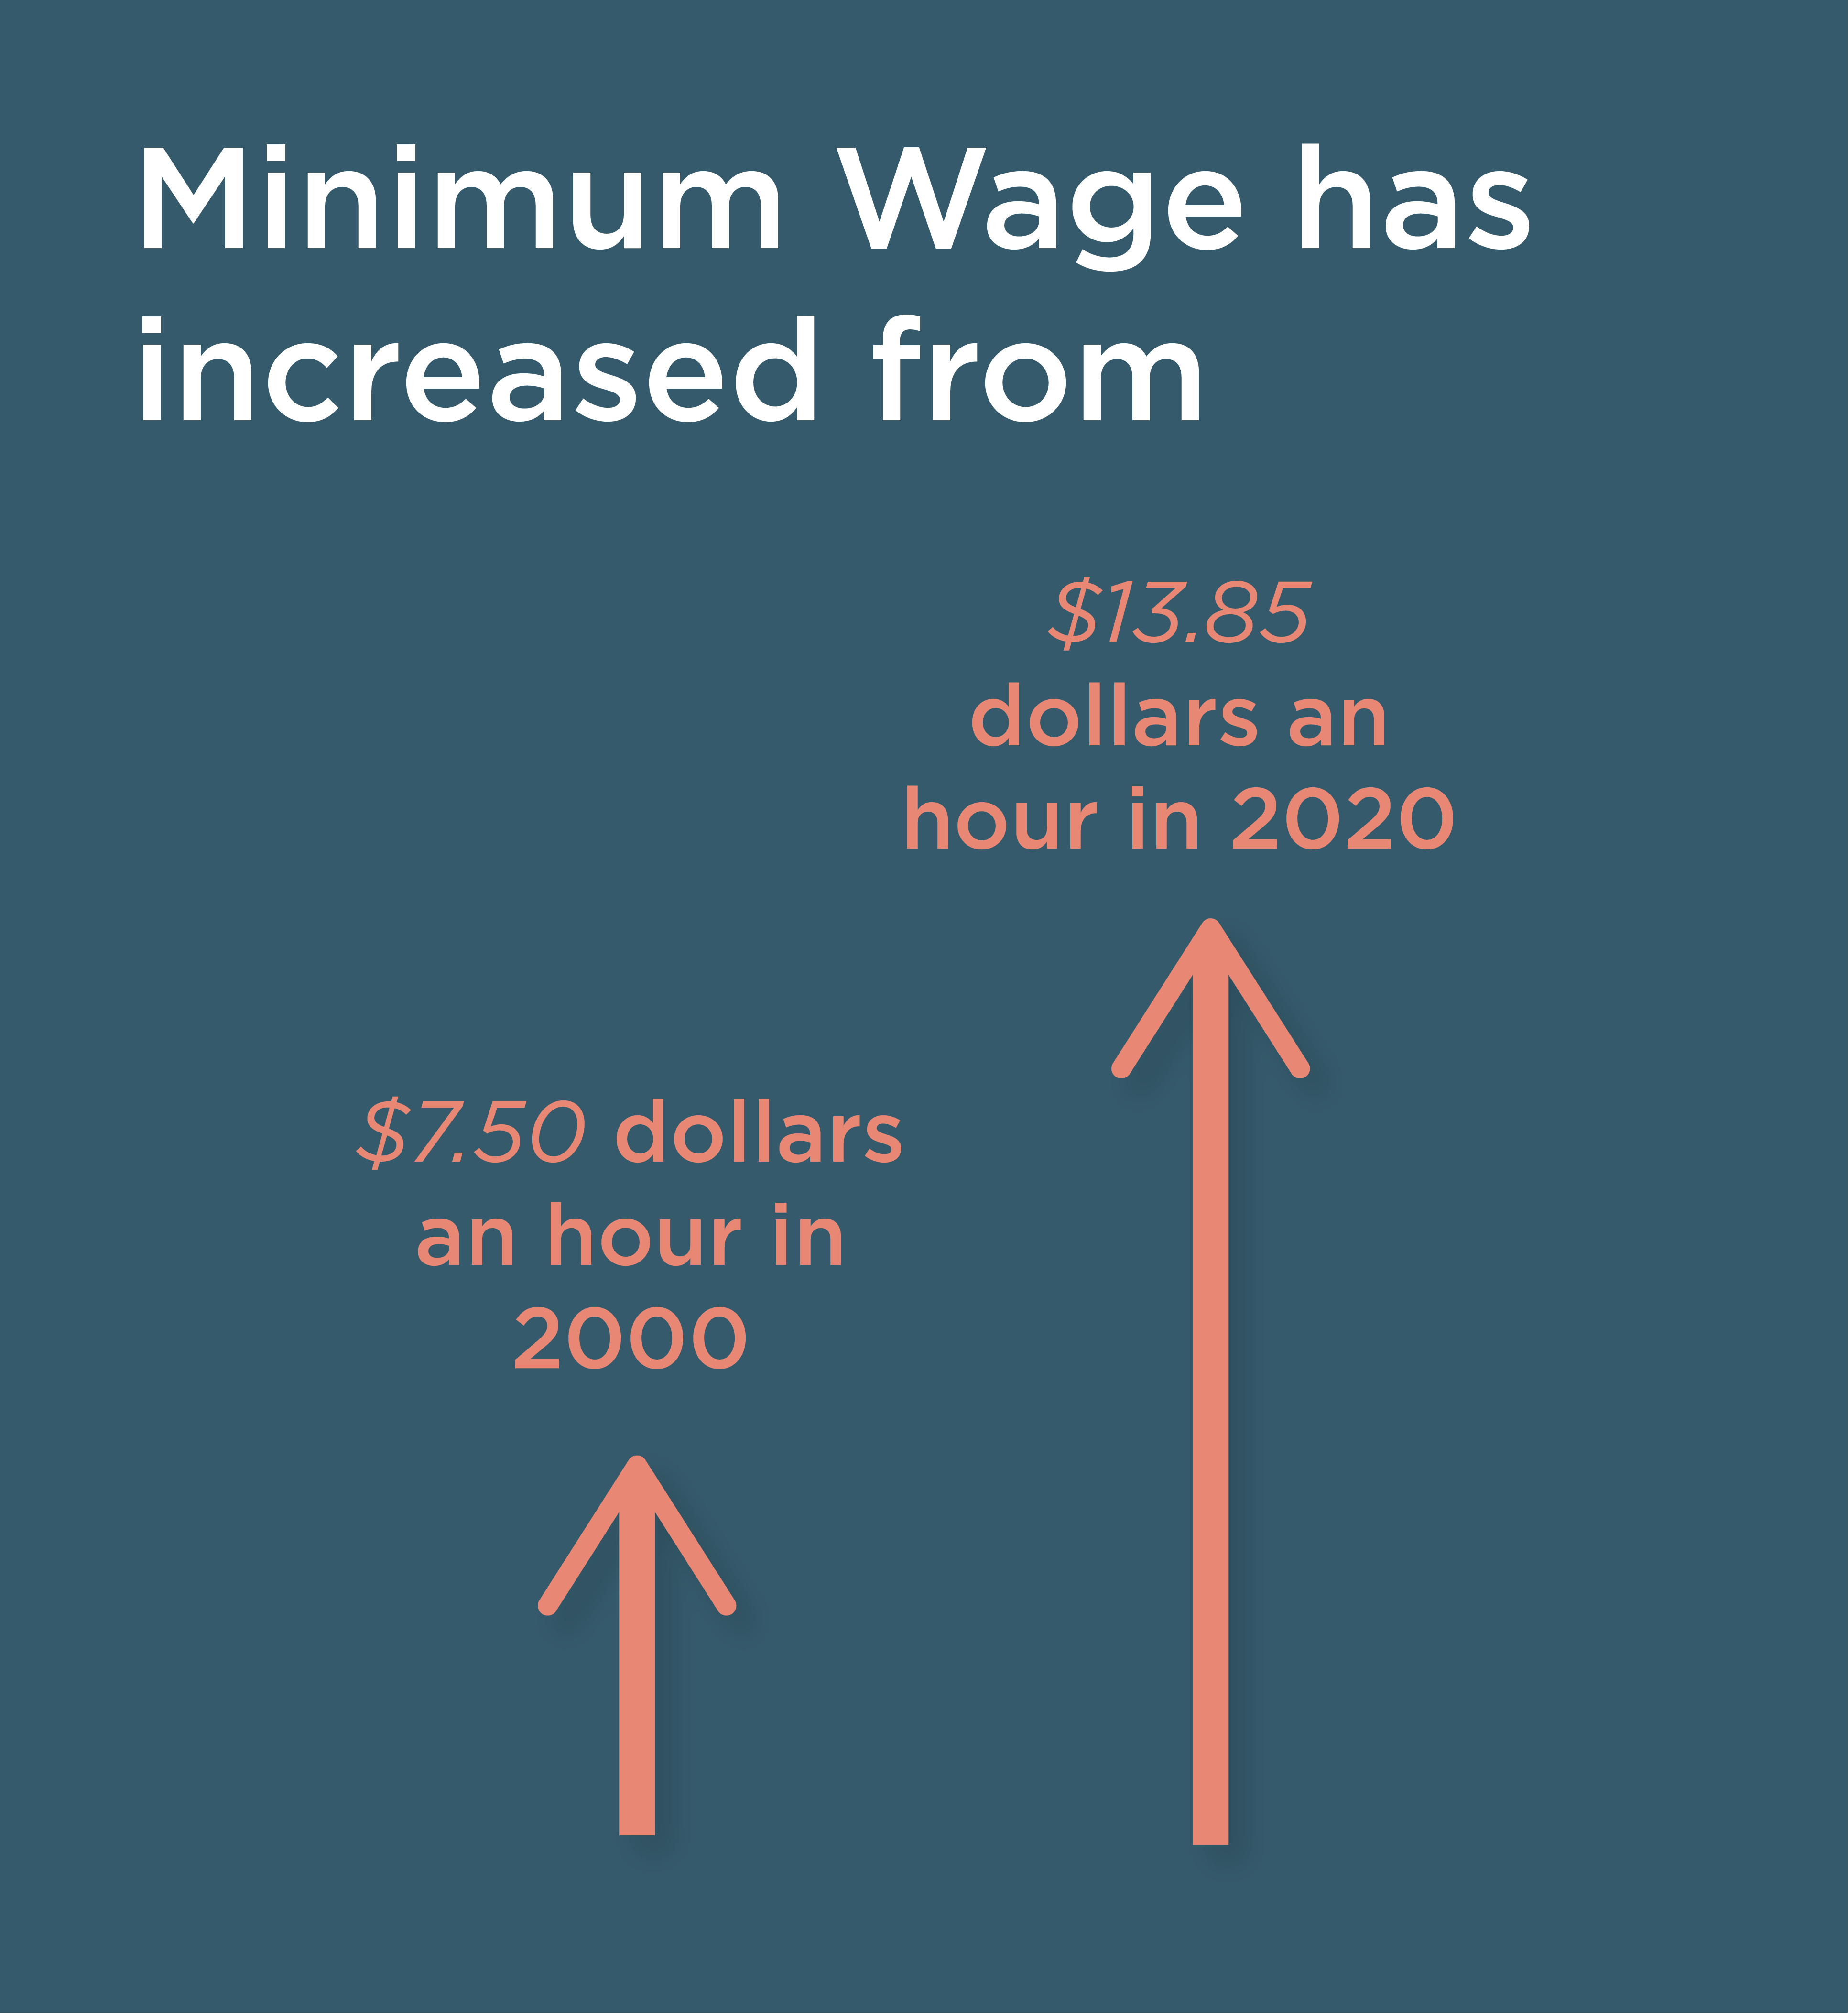 Minimum wage has increased $6.35 in 20 years